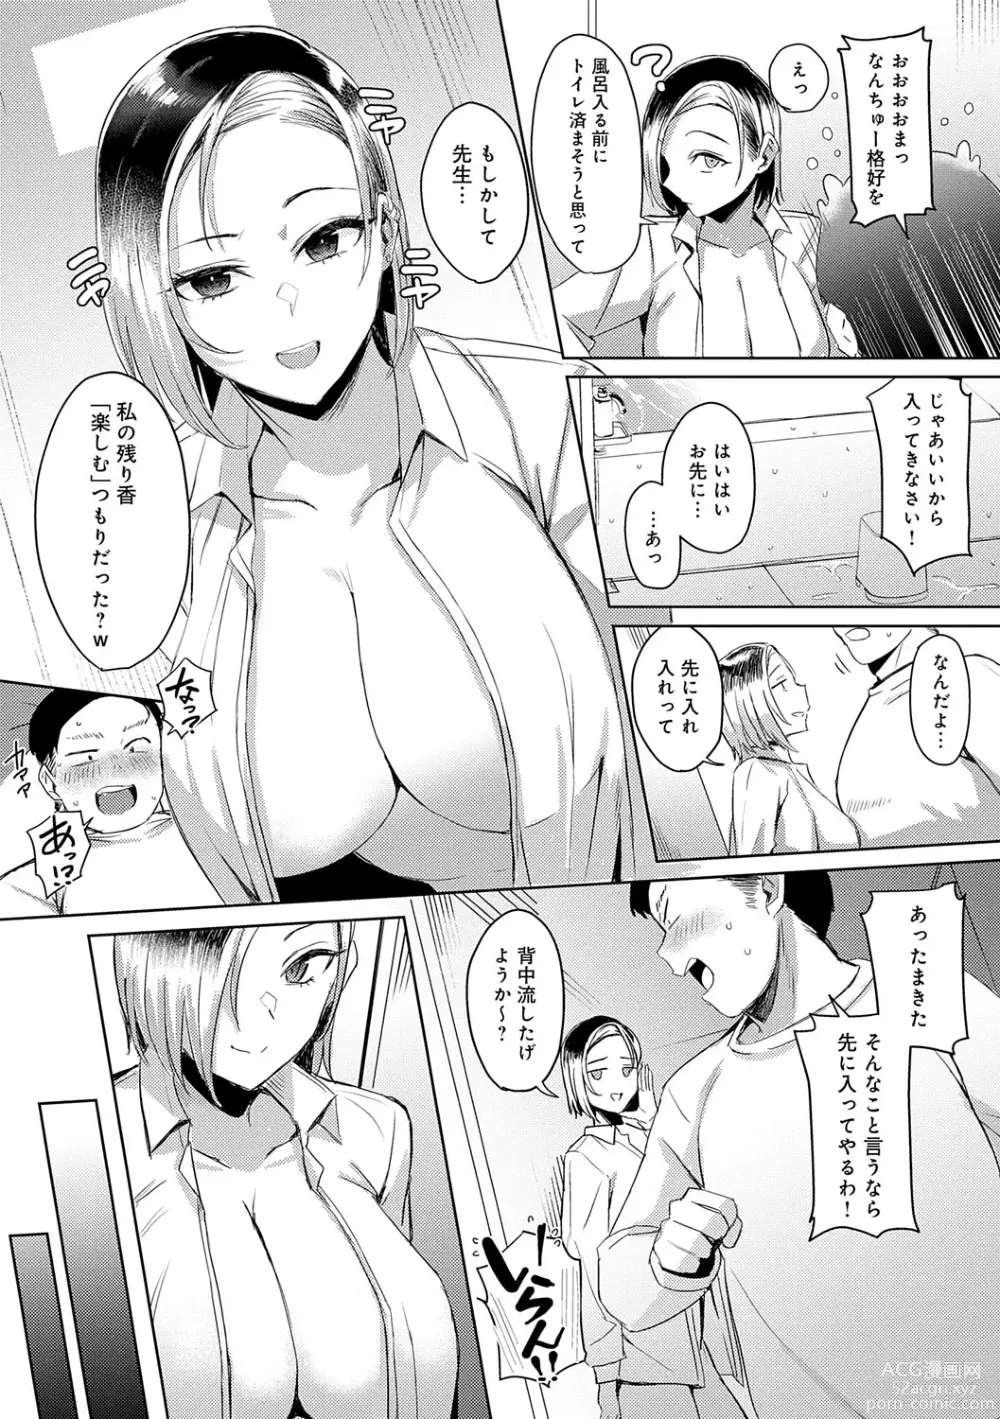 Page 9 of manga Hamerare x Hamaru